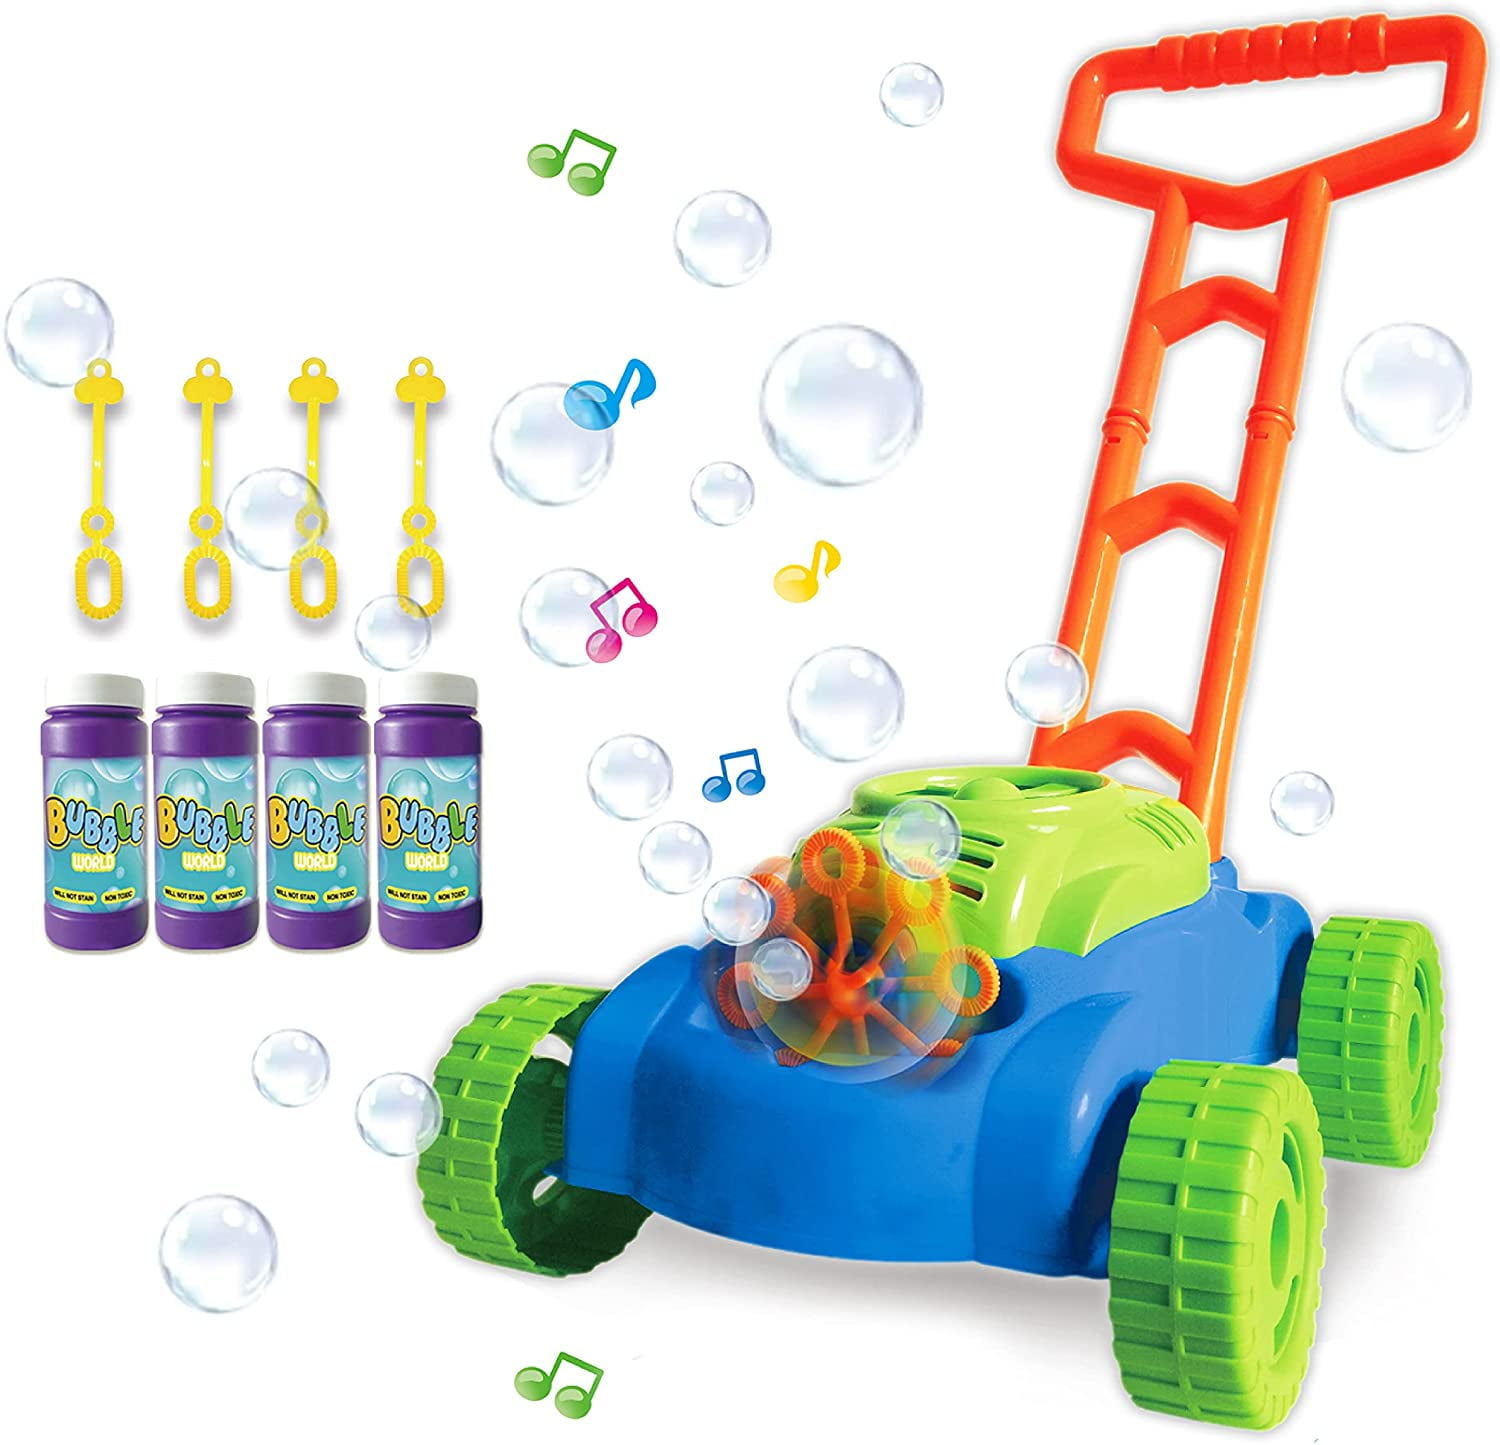 Bubble Lawn Mower Machine Toys Kids Outdoor Play Garden Soap Bubbles Solution